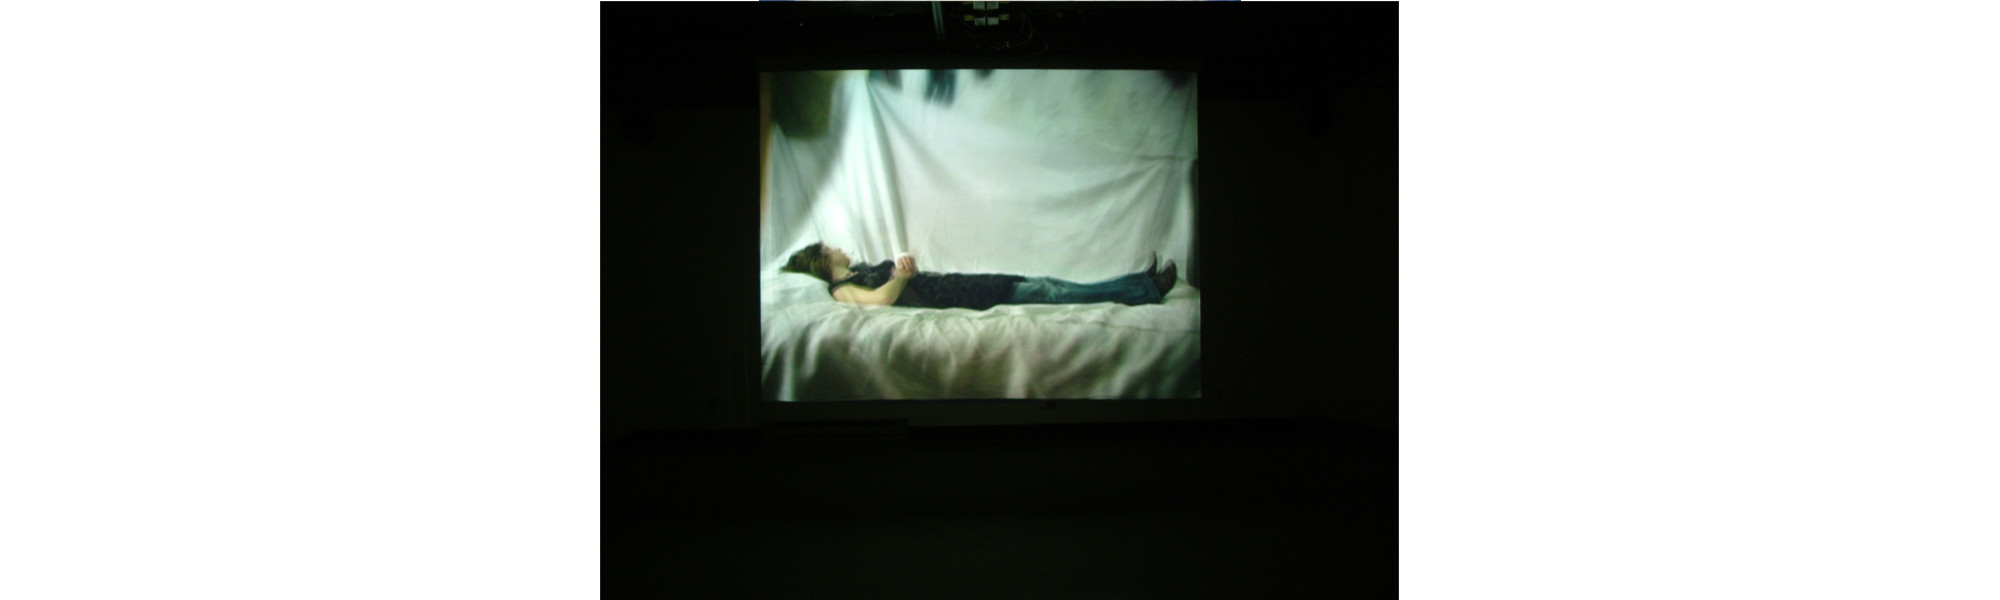 L'art tragique - Installation vidéographique quadriphonique - Sandra Caissy, l'artiste